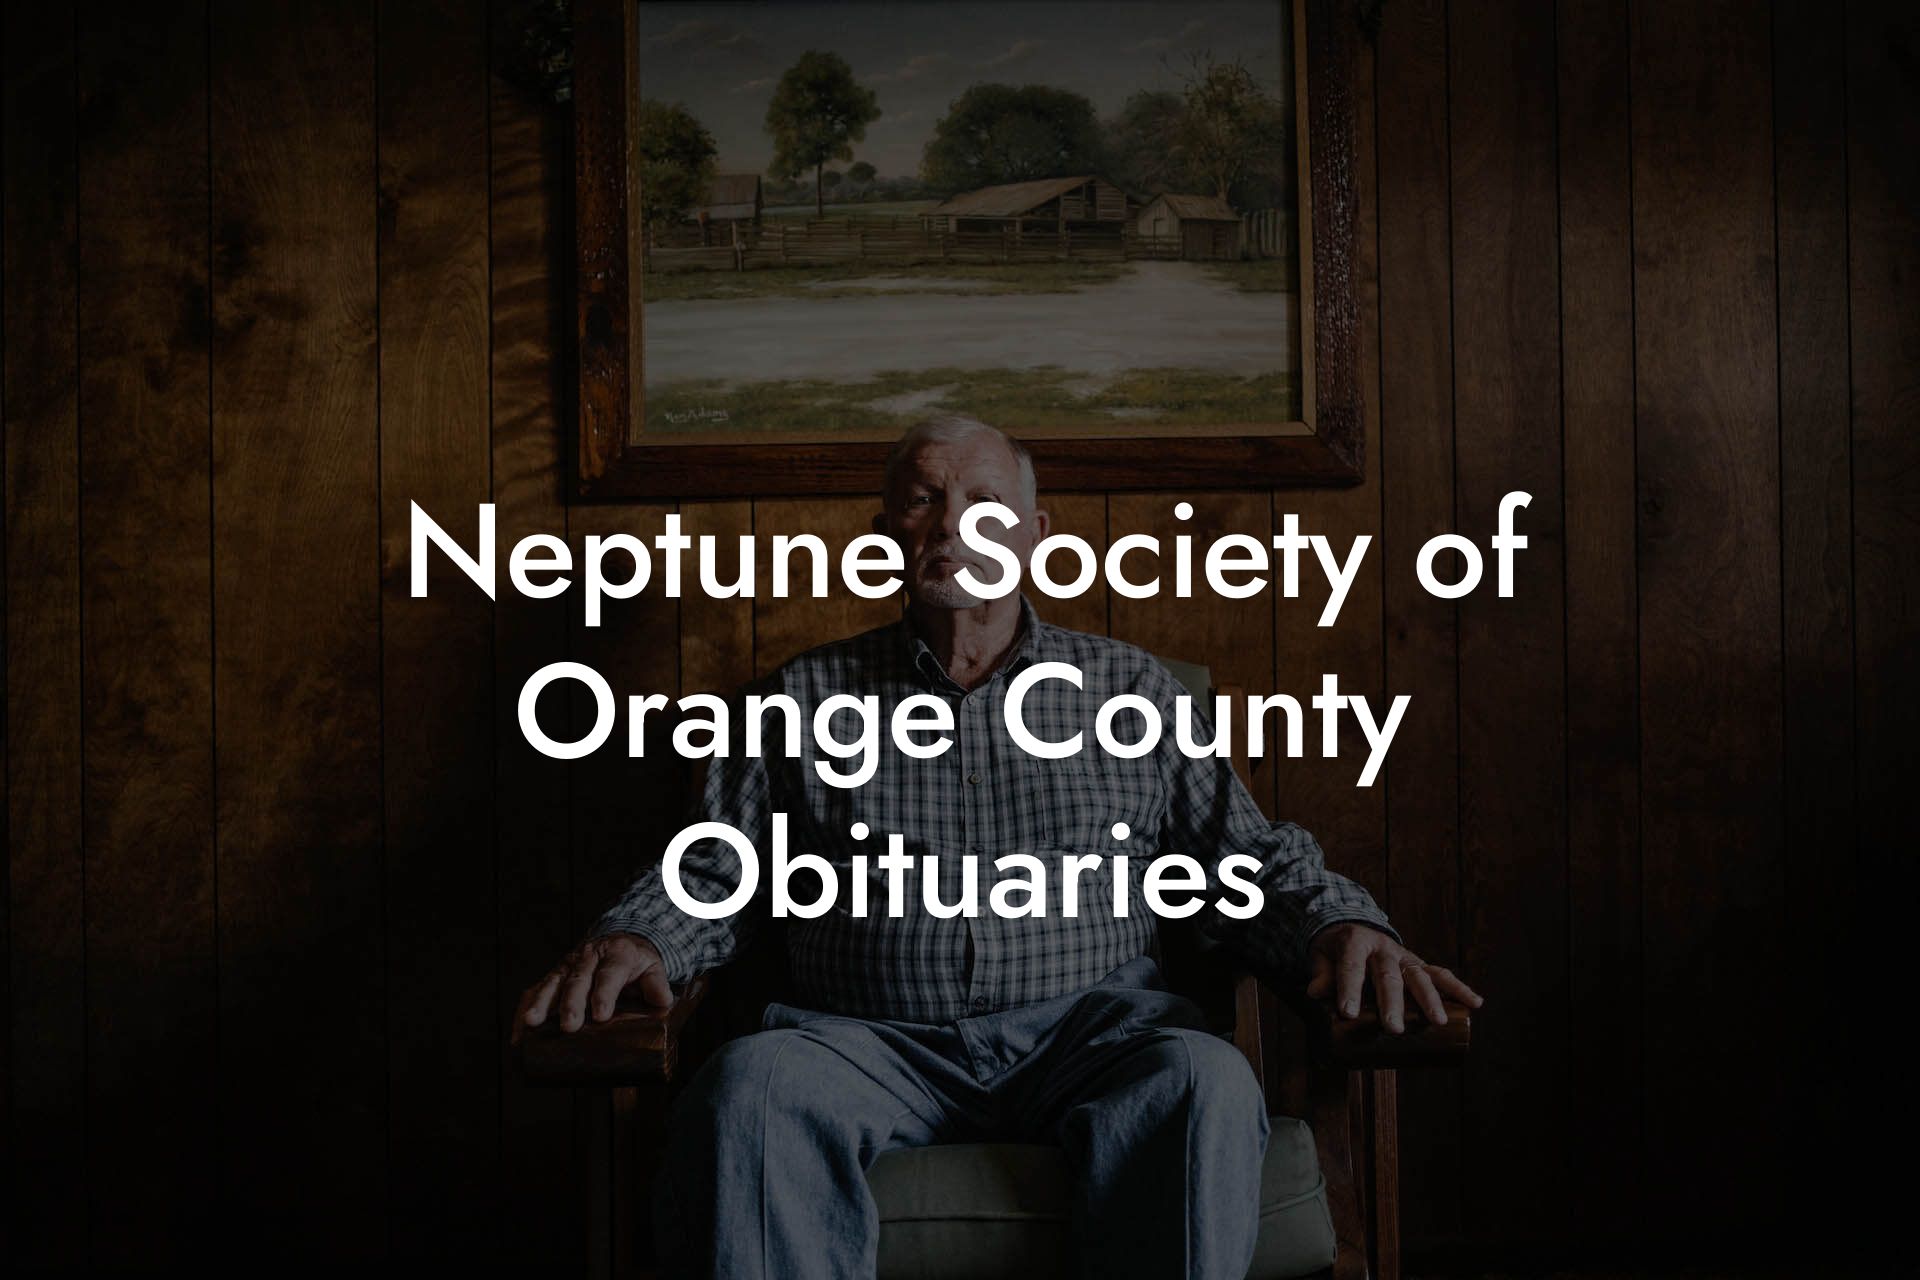 Neptune Society of Orange County Obituaries